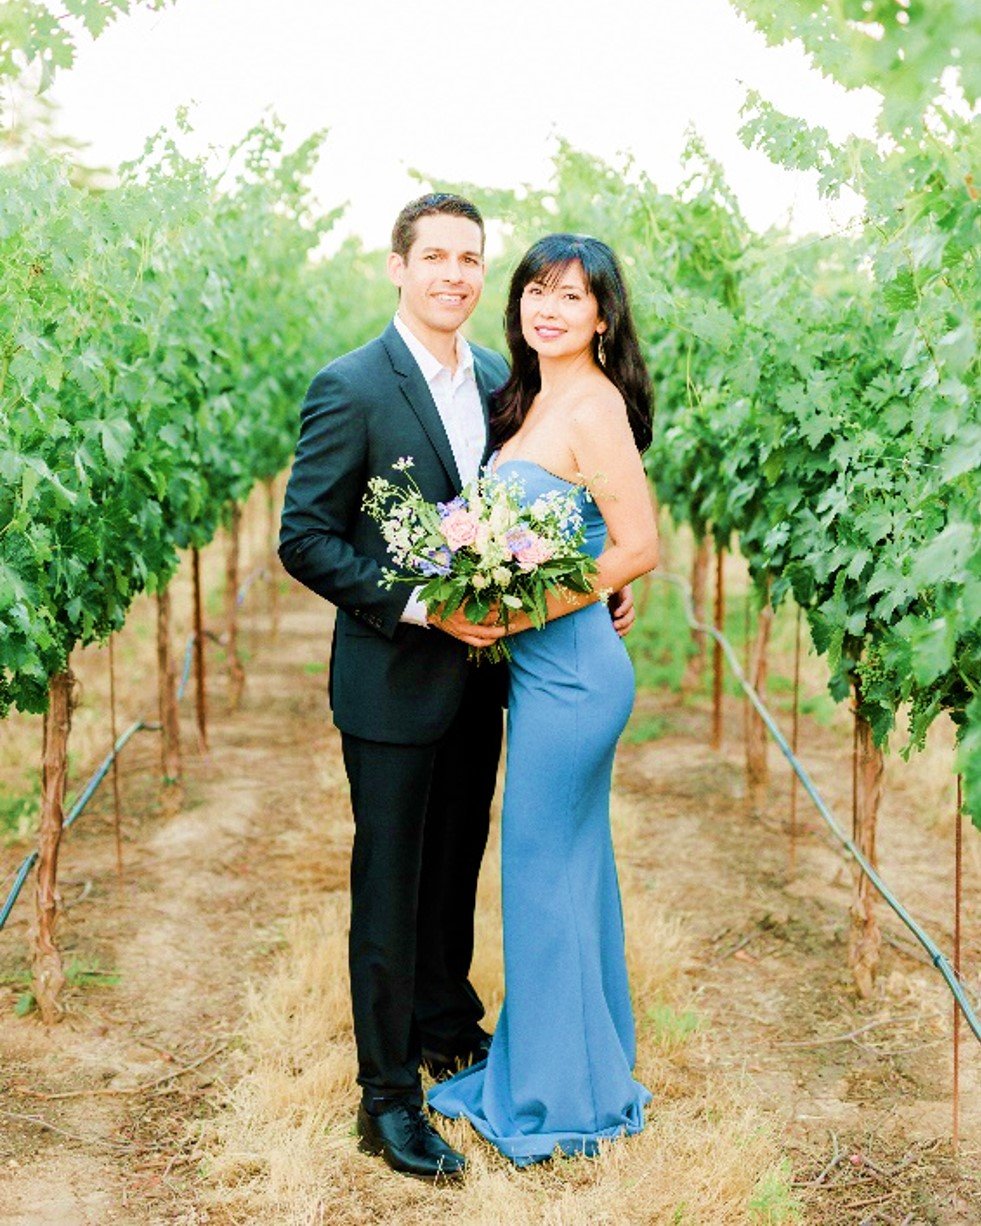 21GBV wedding vines.jpg